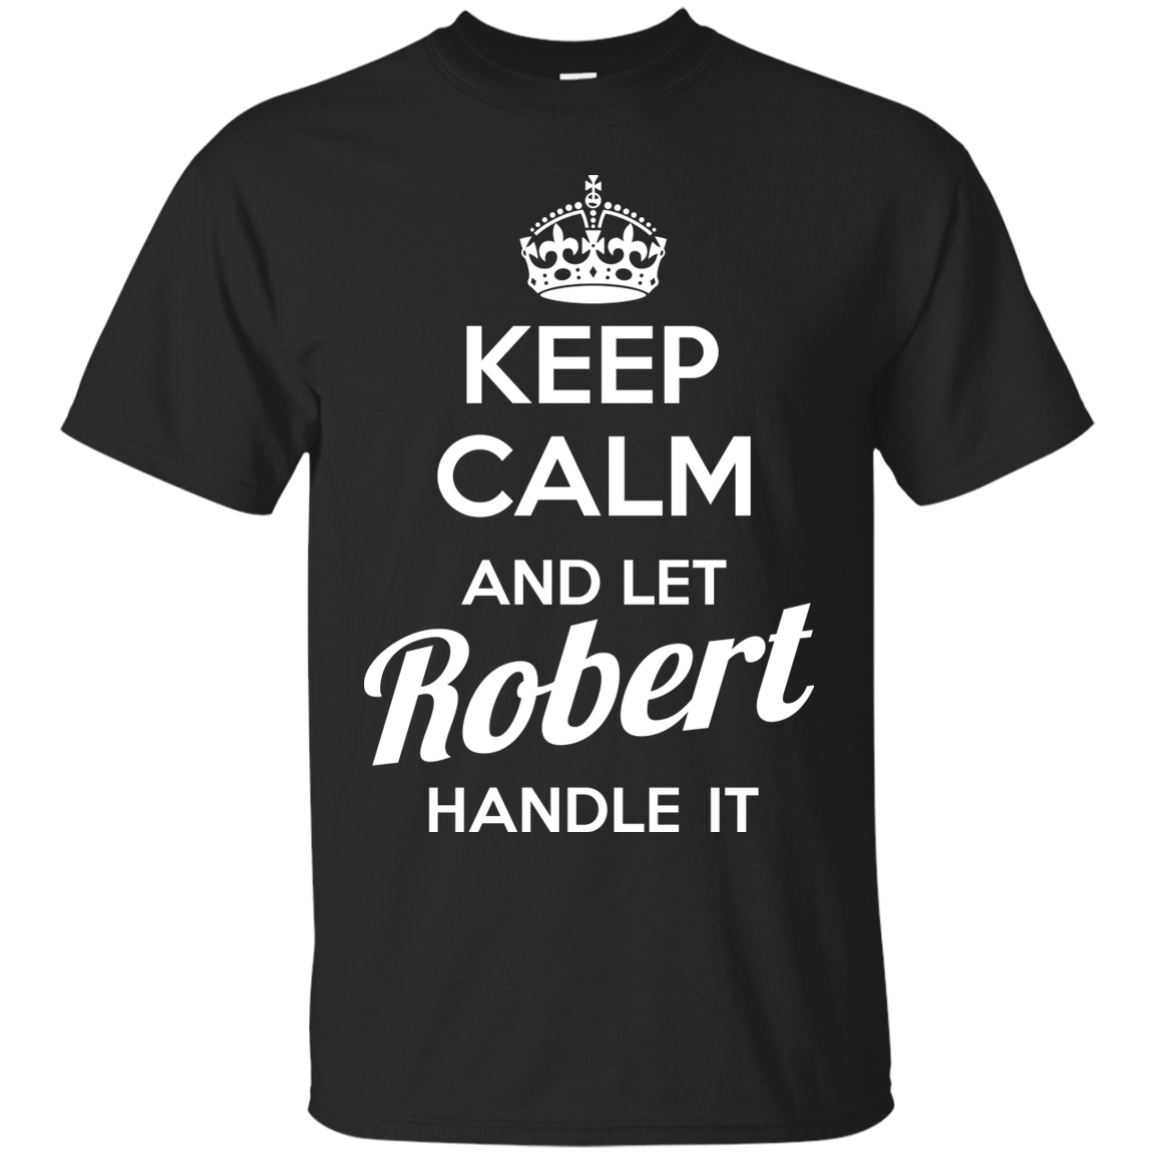 Keep calm and let Robert handle it t-shirt & hoodies